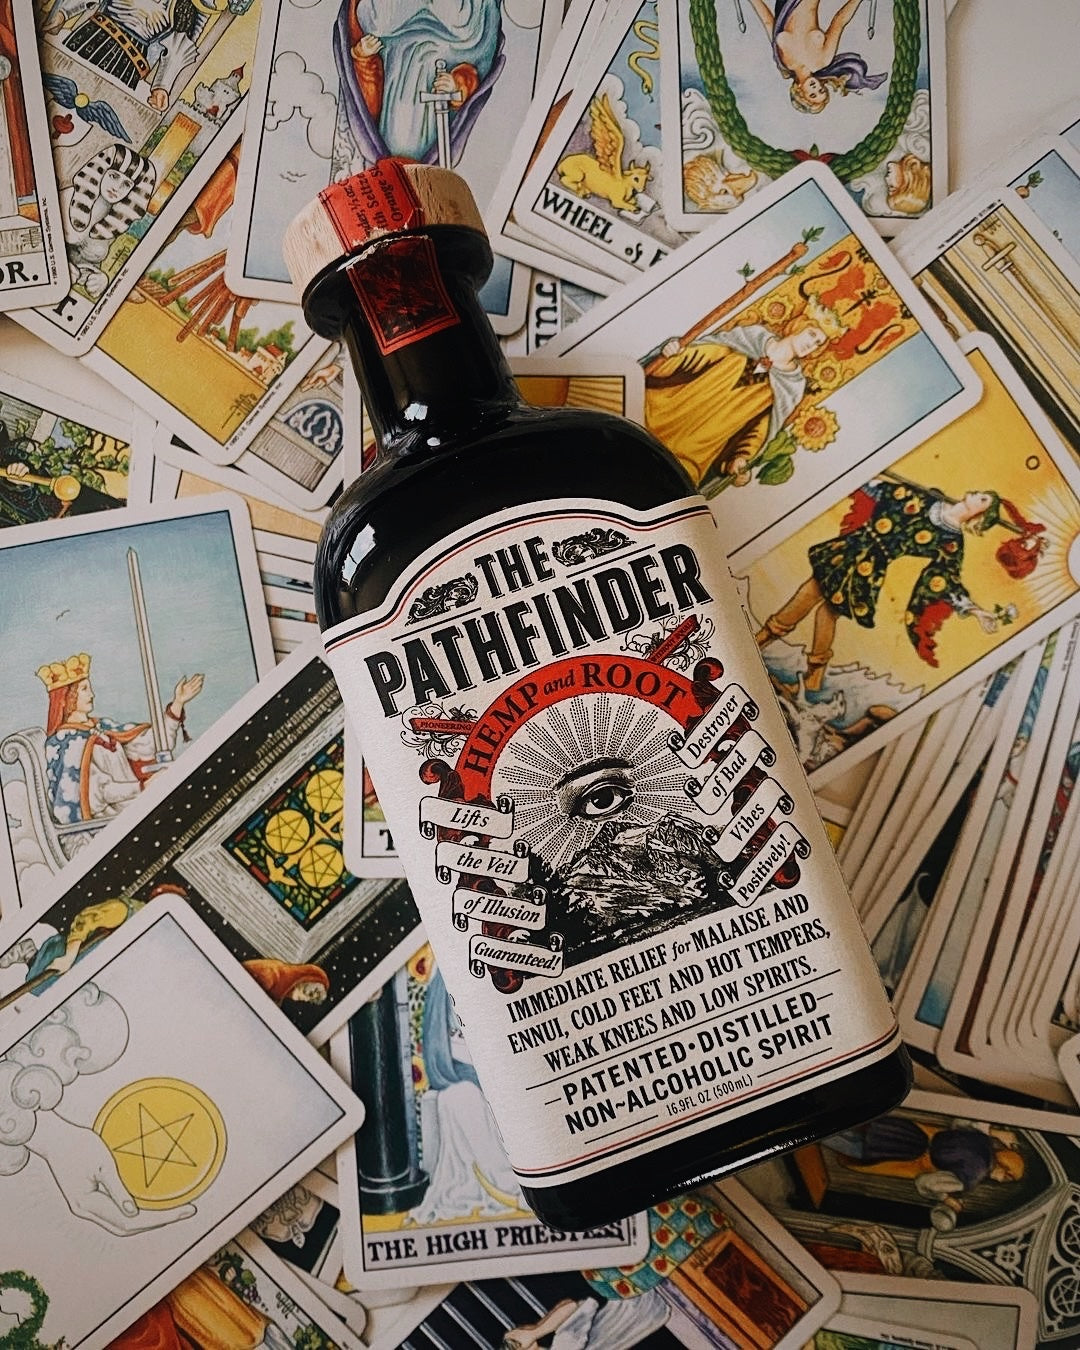 Pathfinder - make great tasting alcohol free cocktails